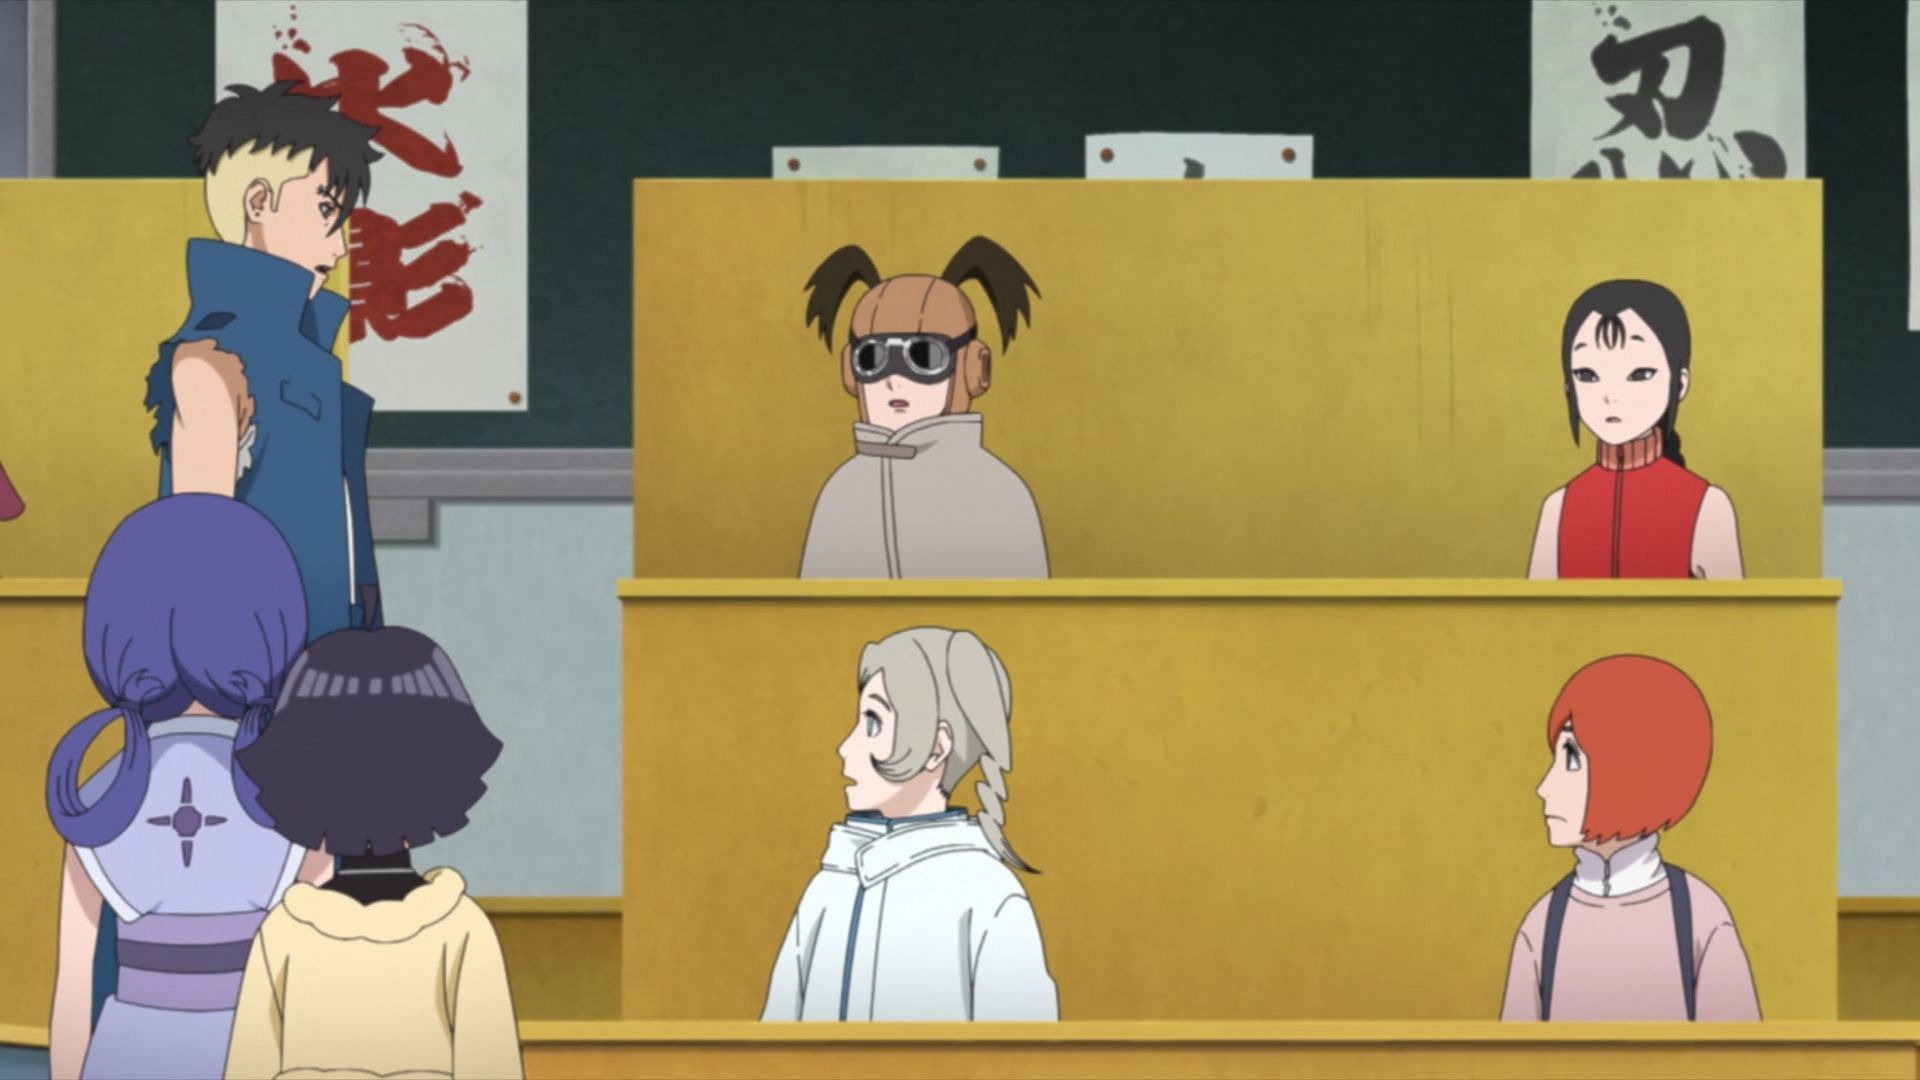 Kawaki is the funniest character in Boruto Episode 261 (Image via Studio Pierrot)